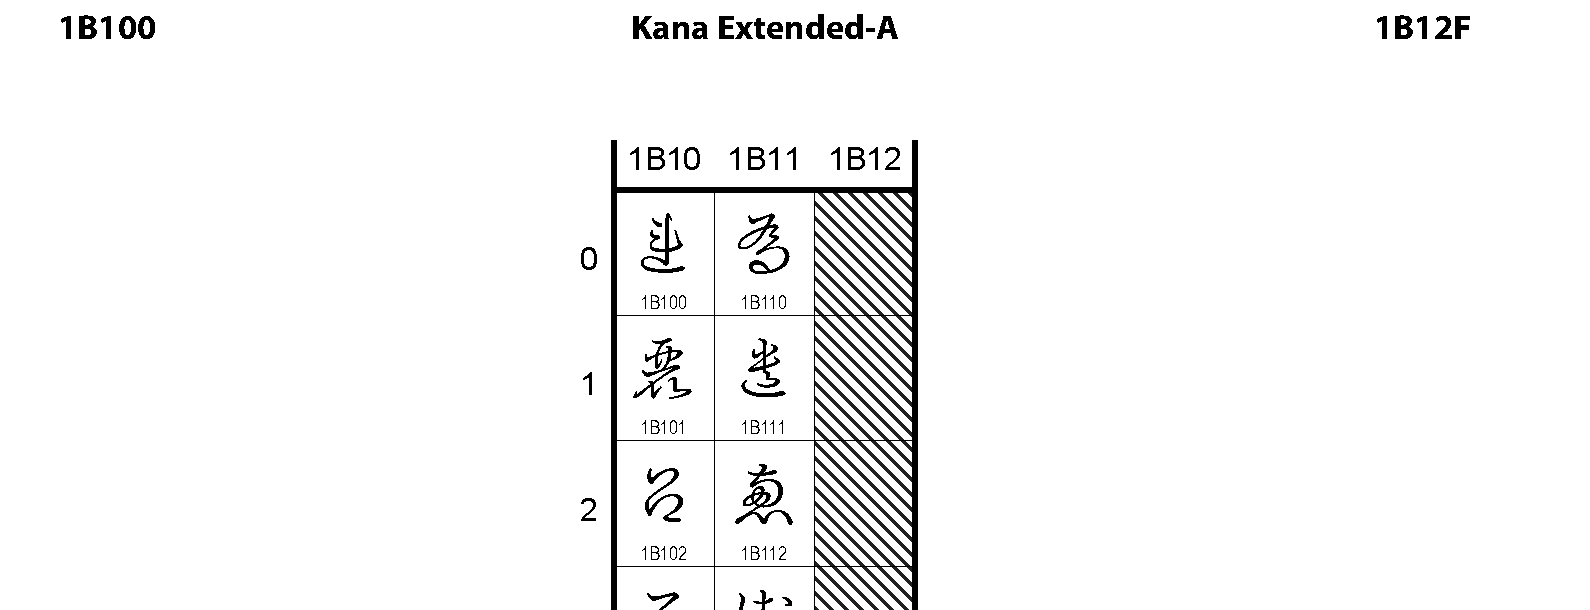 Unicode - Kana Extended-A